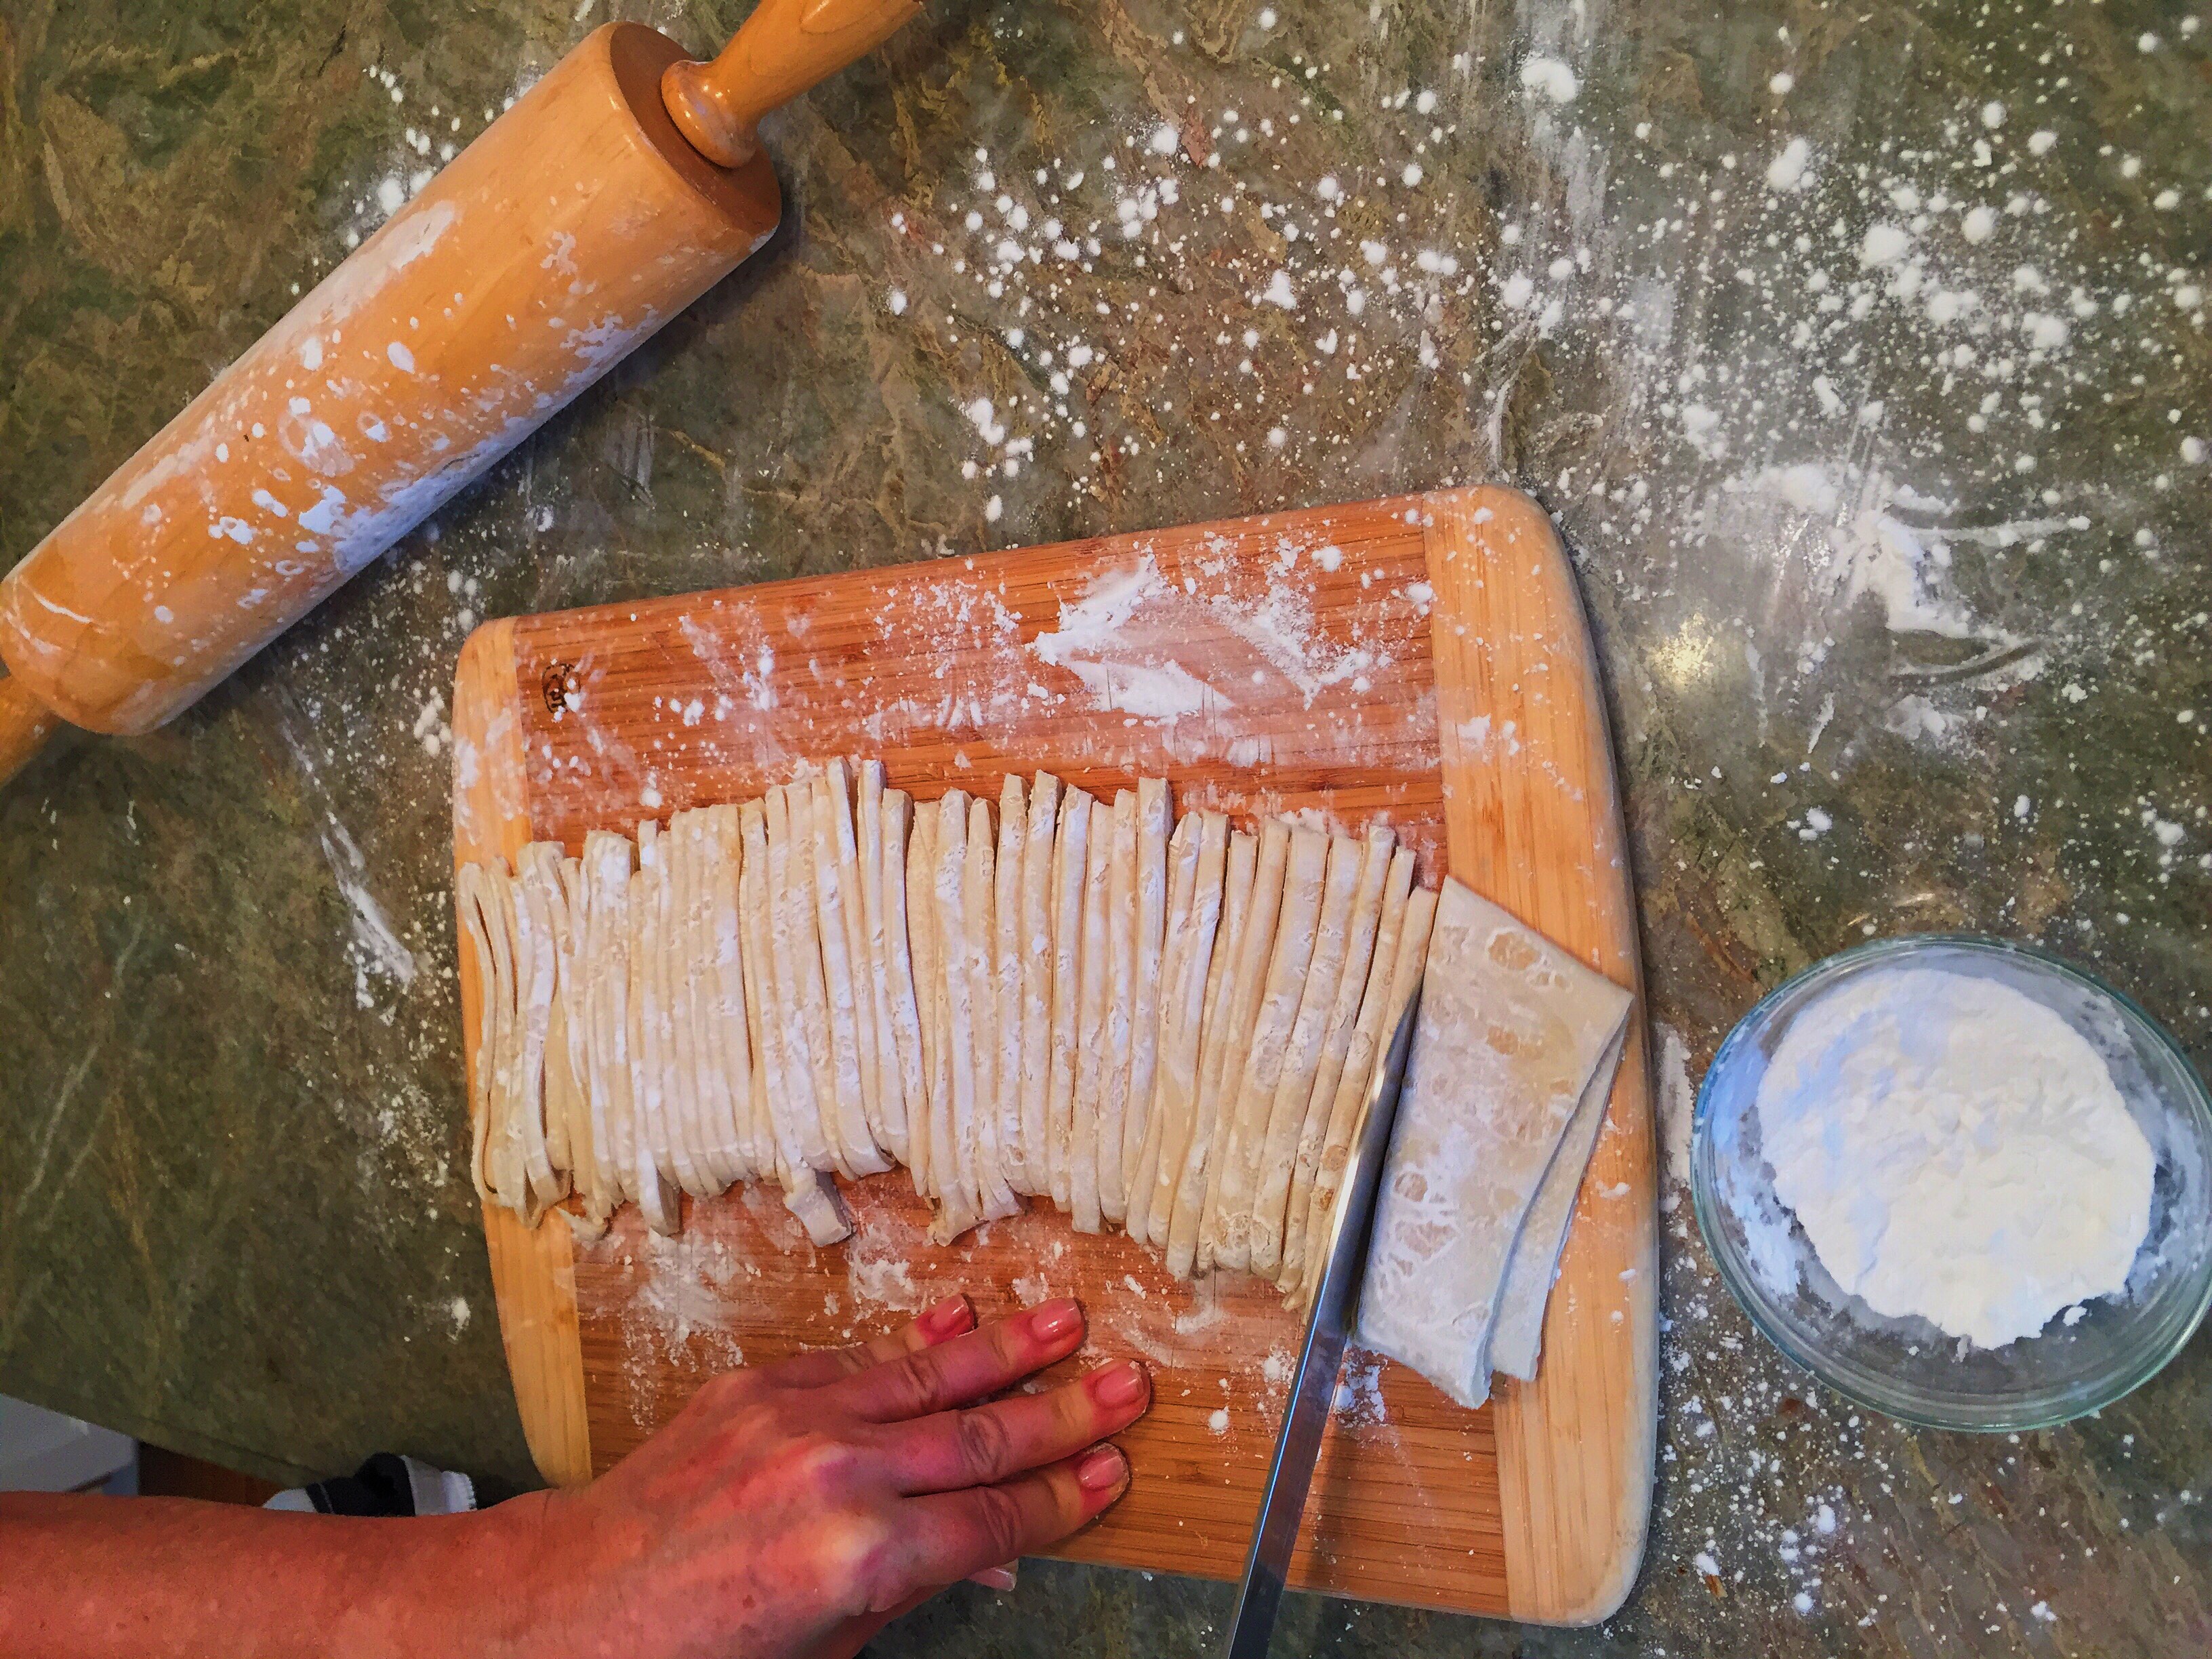 Cutting the dough